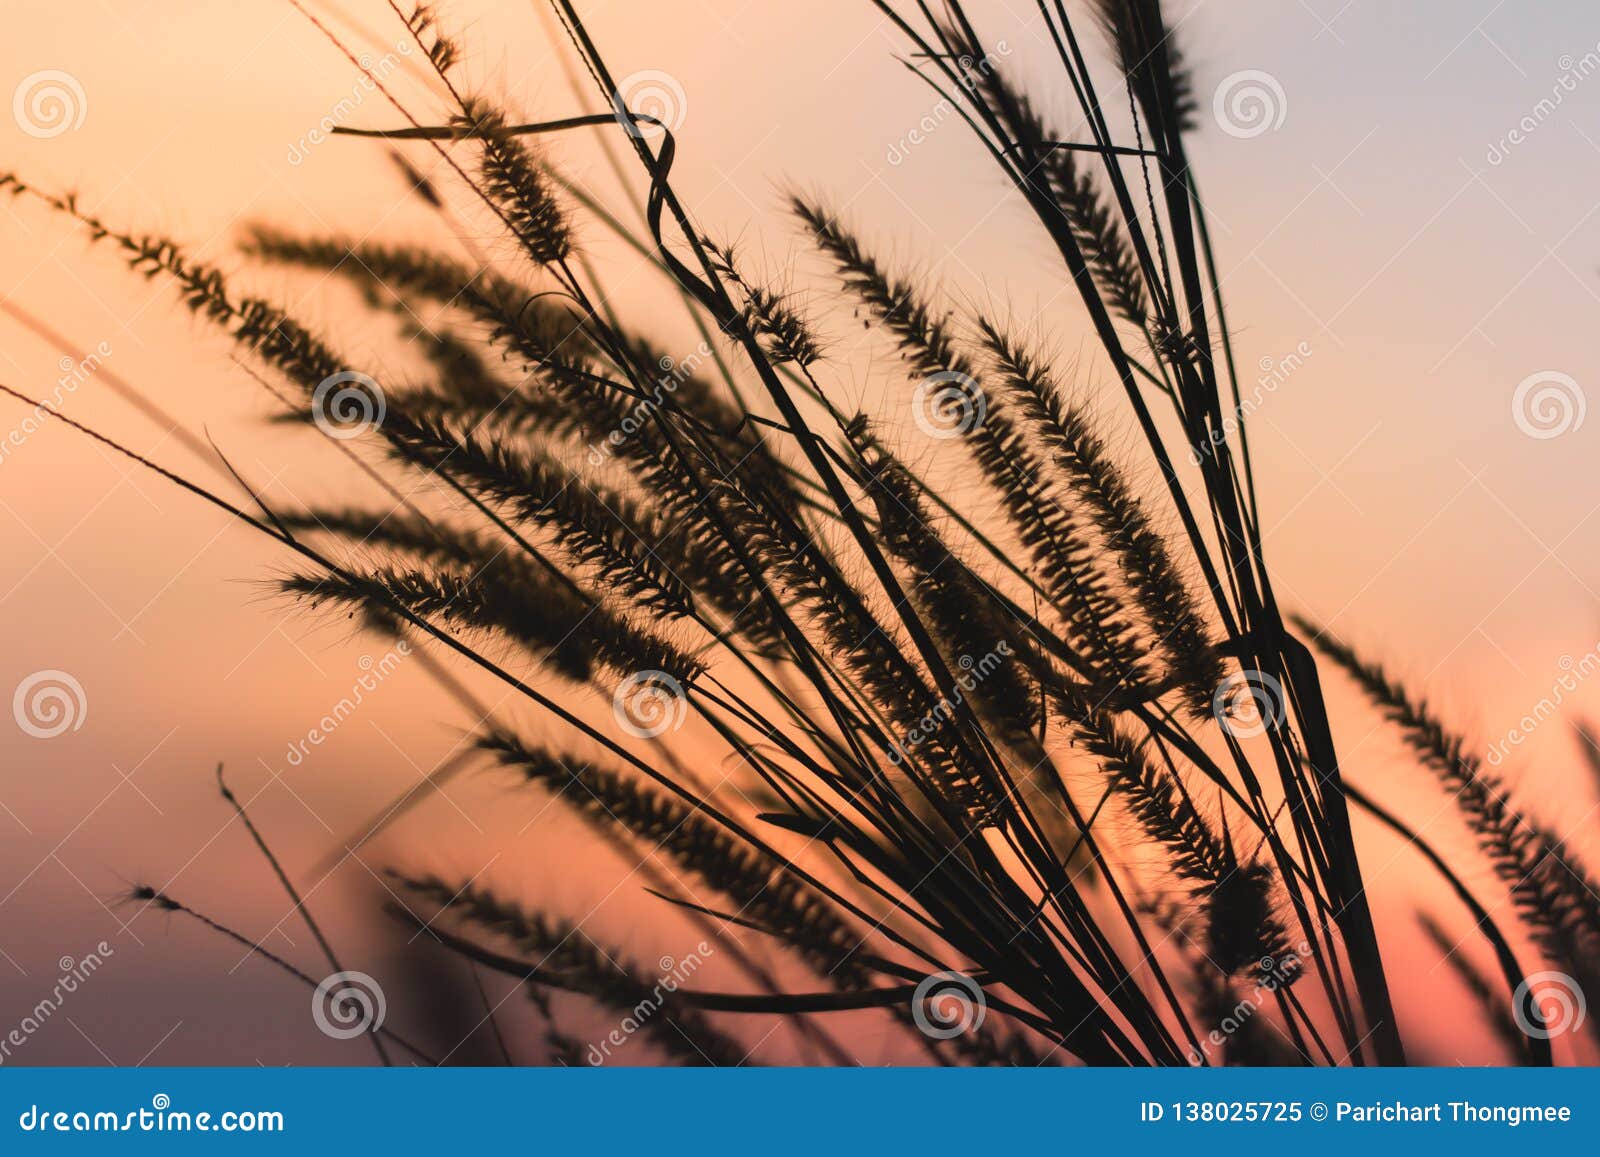 Beautiful Scene with Waving Wild Grass at Beautiful Romantic Sunset